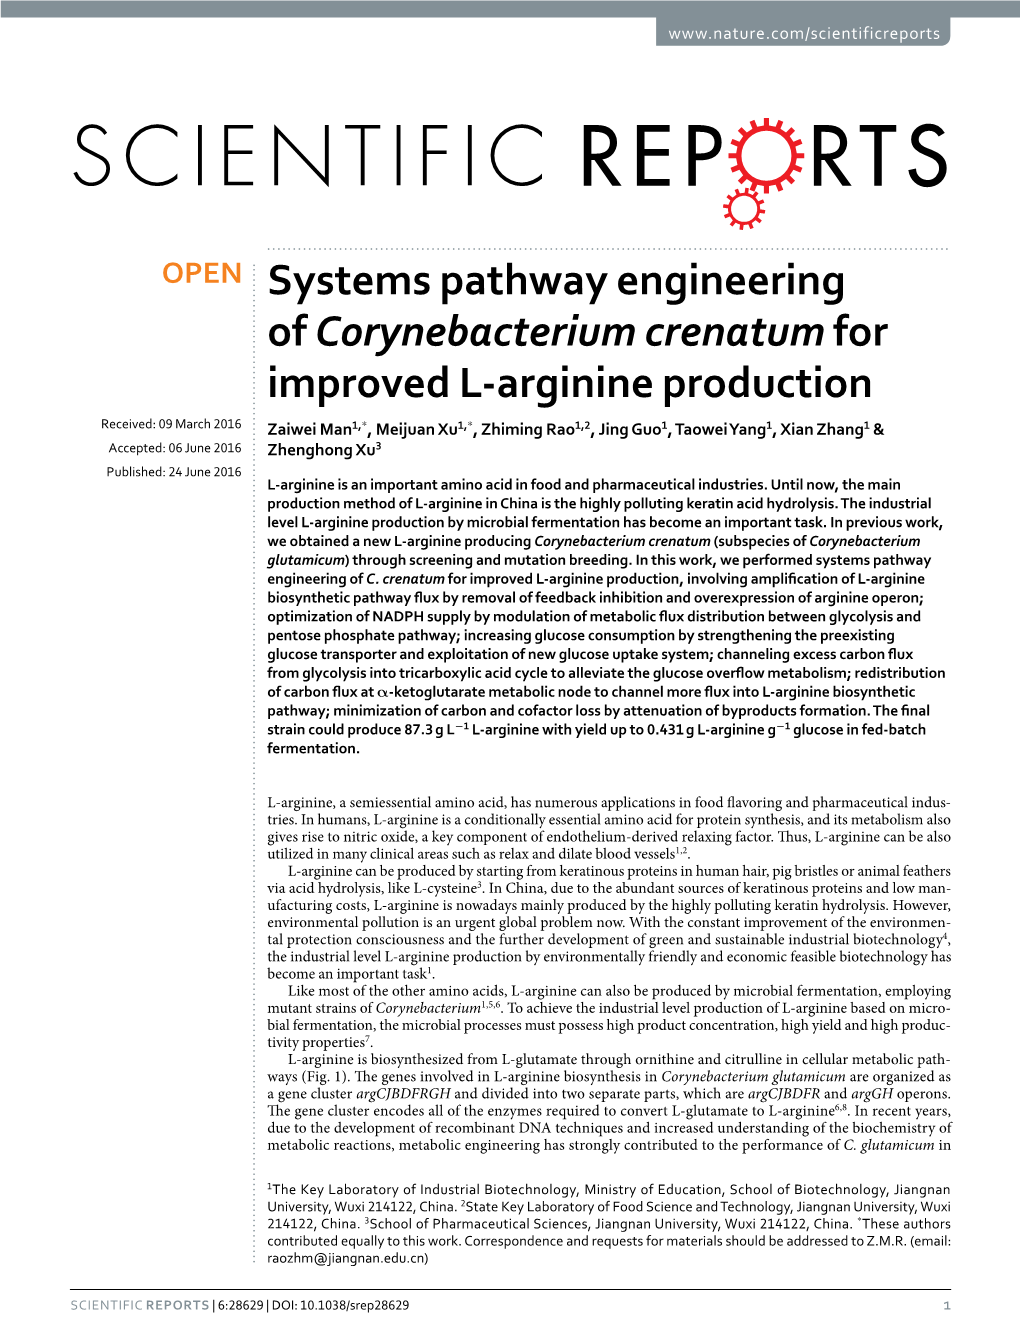 Systems Pathway Engineering of Corynebacterium Crenatum for Improved L-Arginine Production